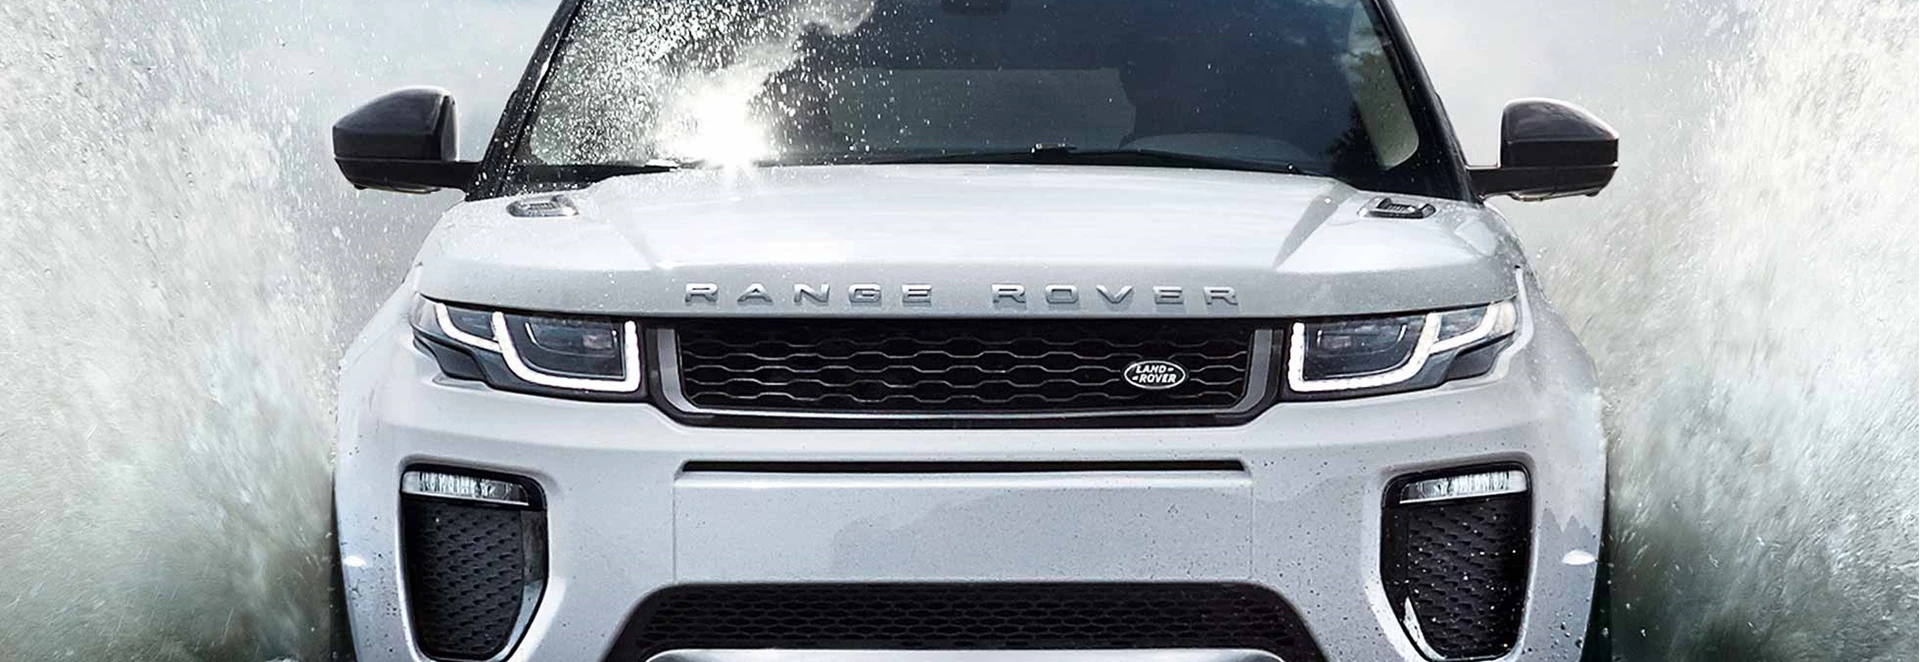 2016 Range Rover Evoque pricing confirmed